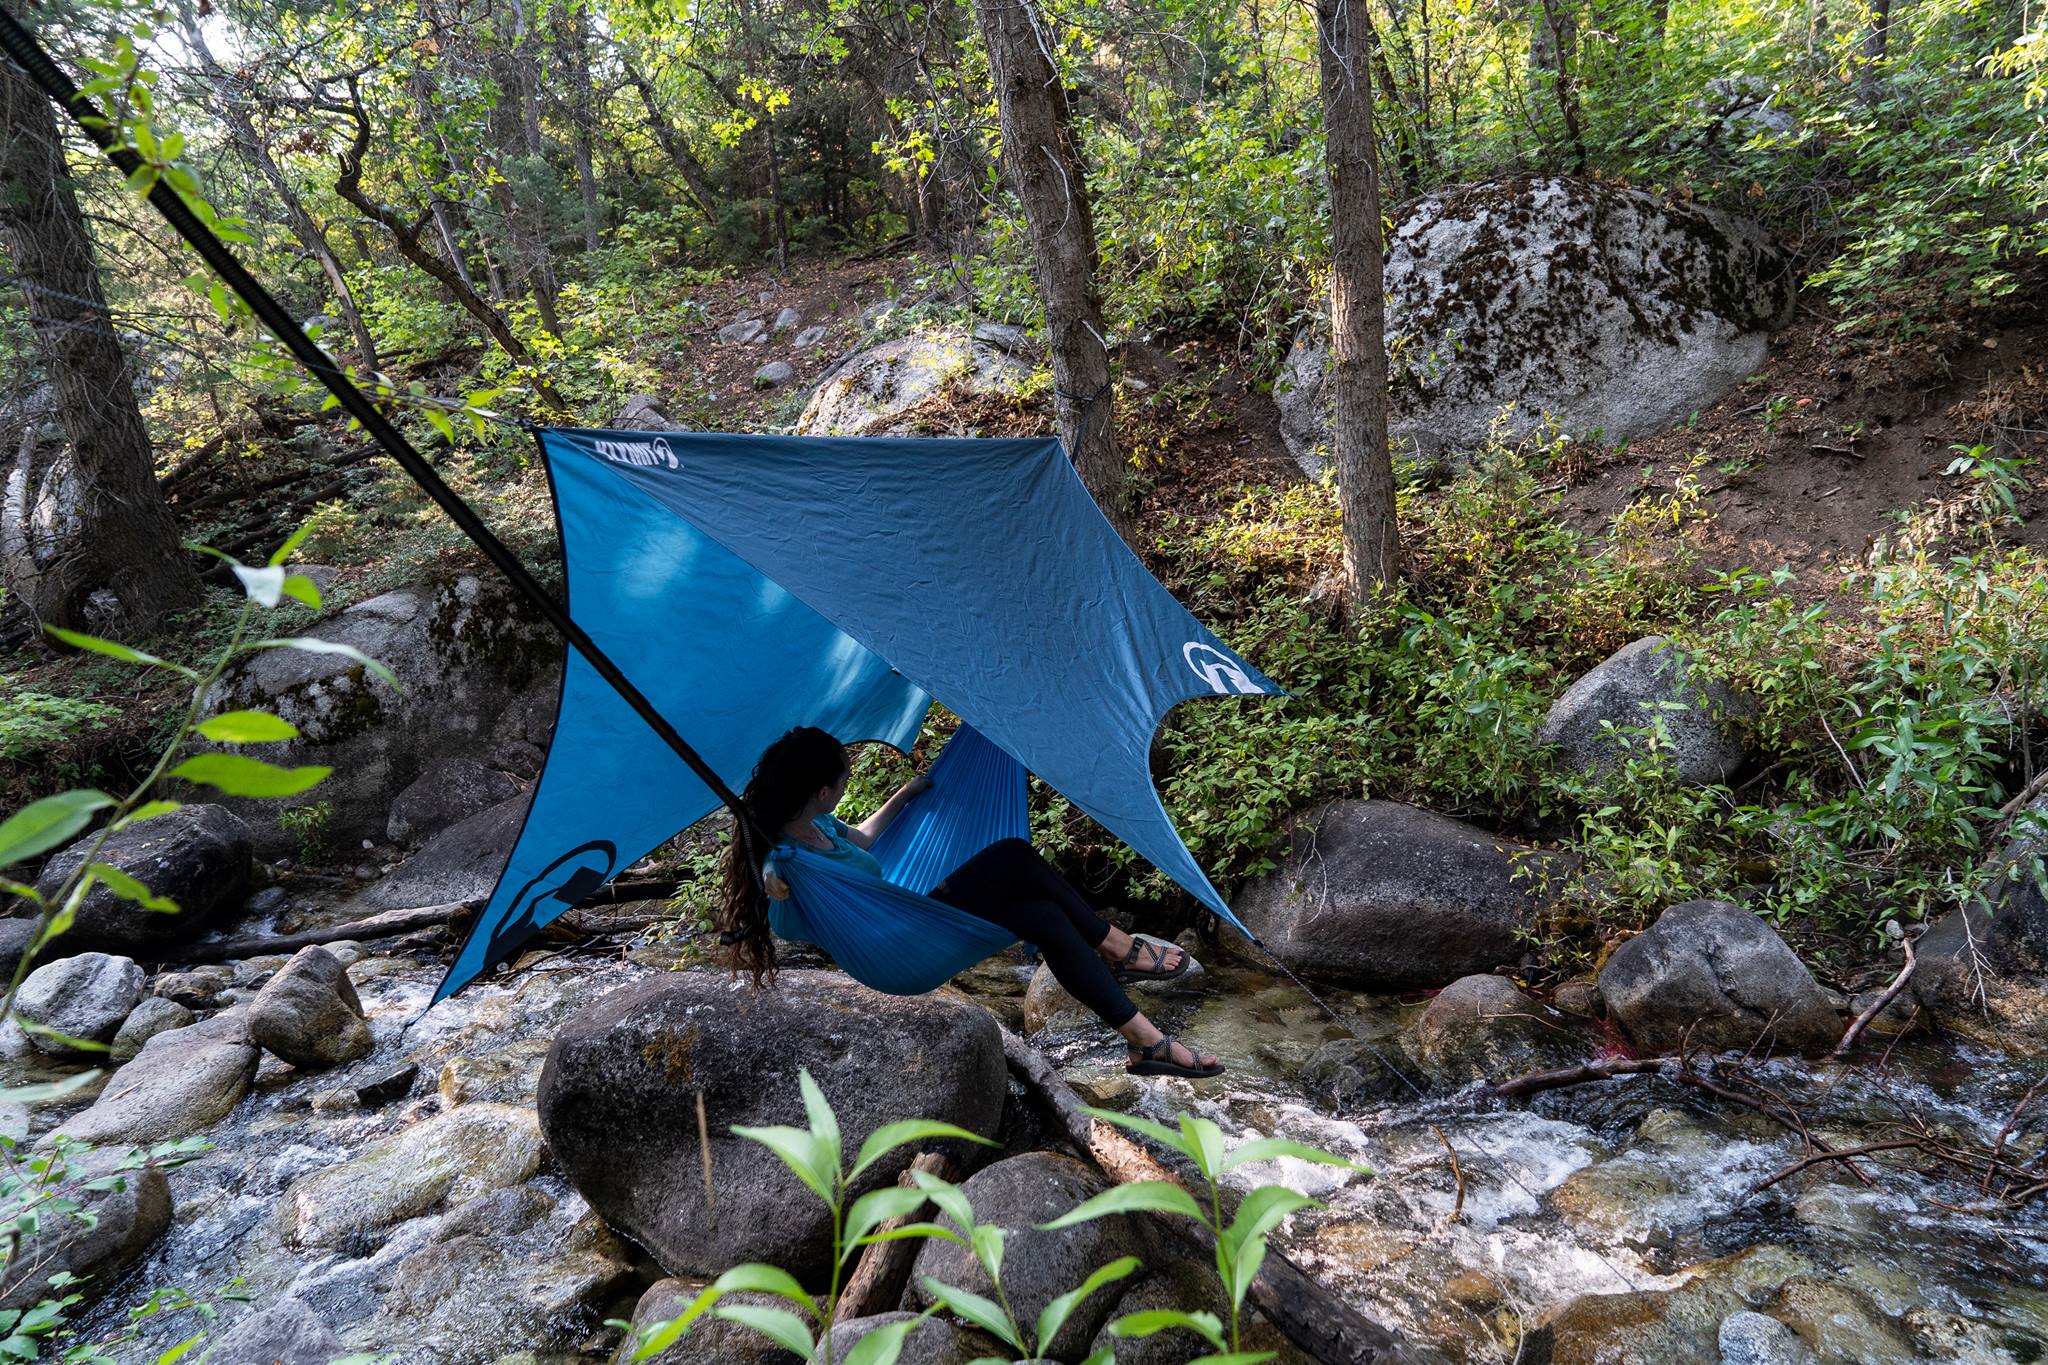 Klymit Camping Equipment at Costco Bonney Lake